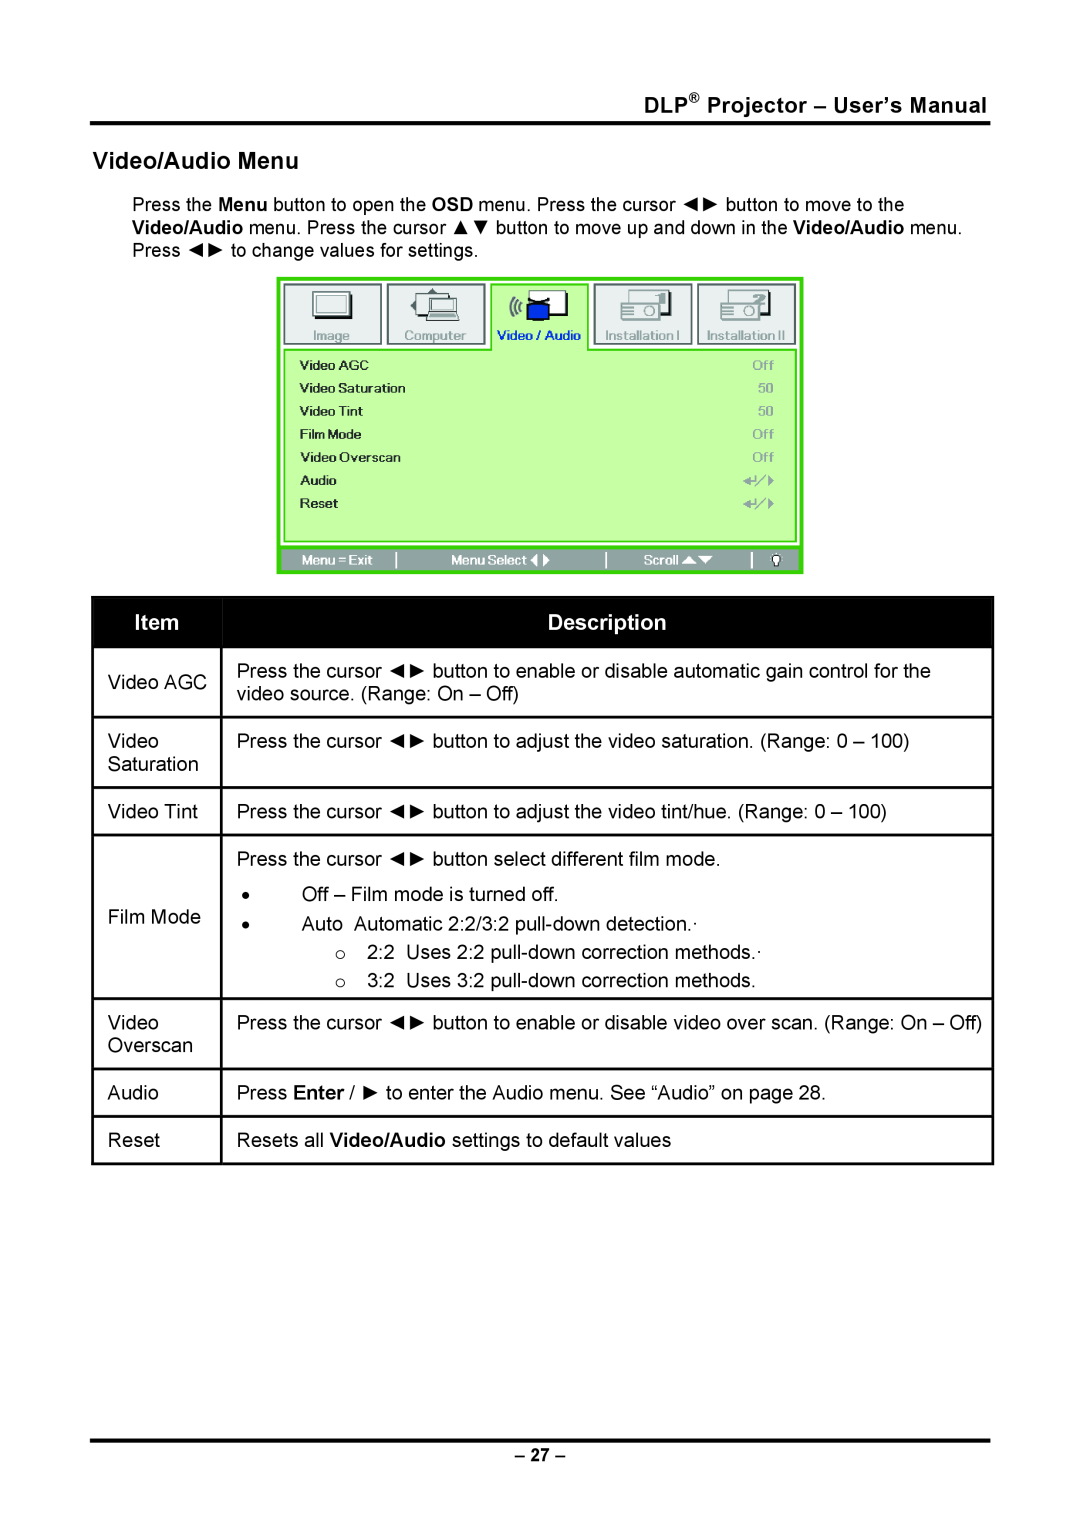 Planar PR5030 manual Video/Audio Menu, DLP Projector - User’s Manual, Description 